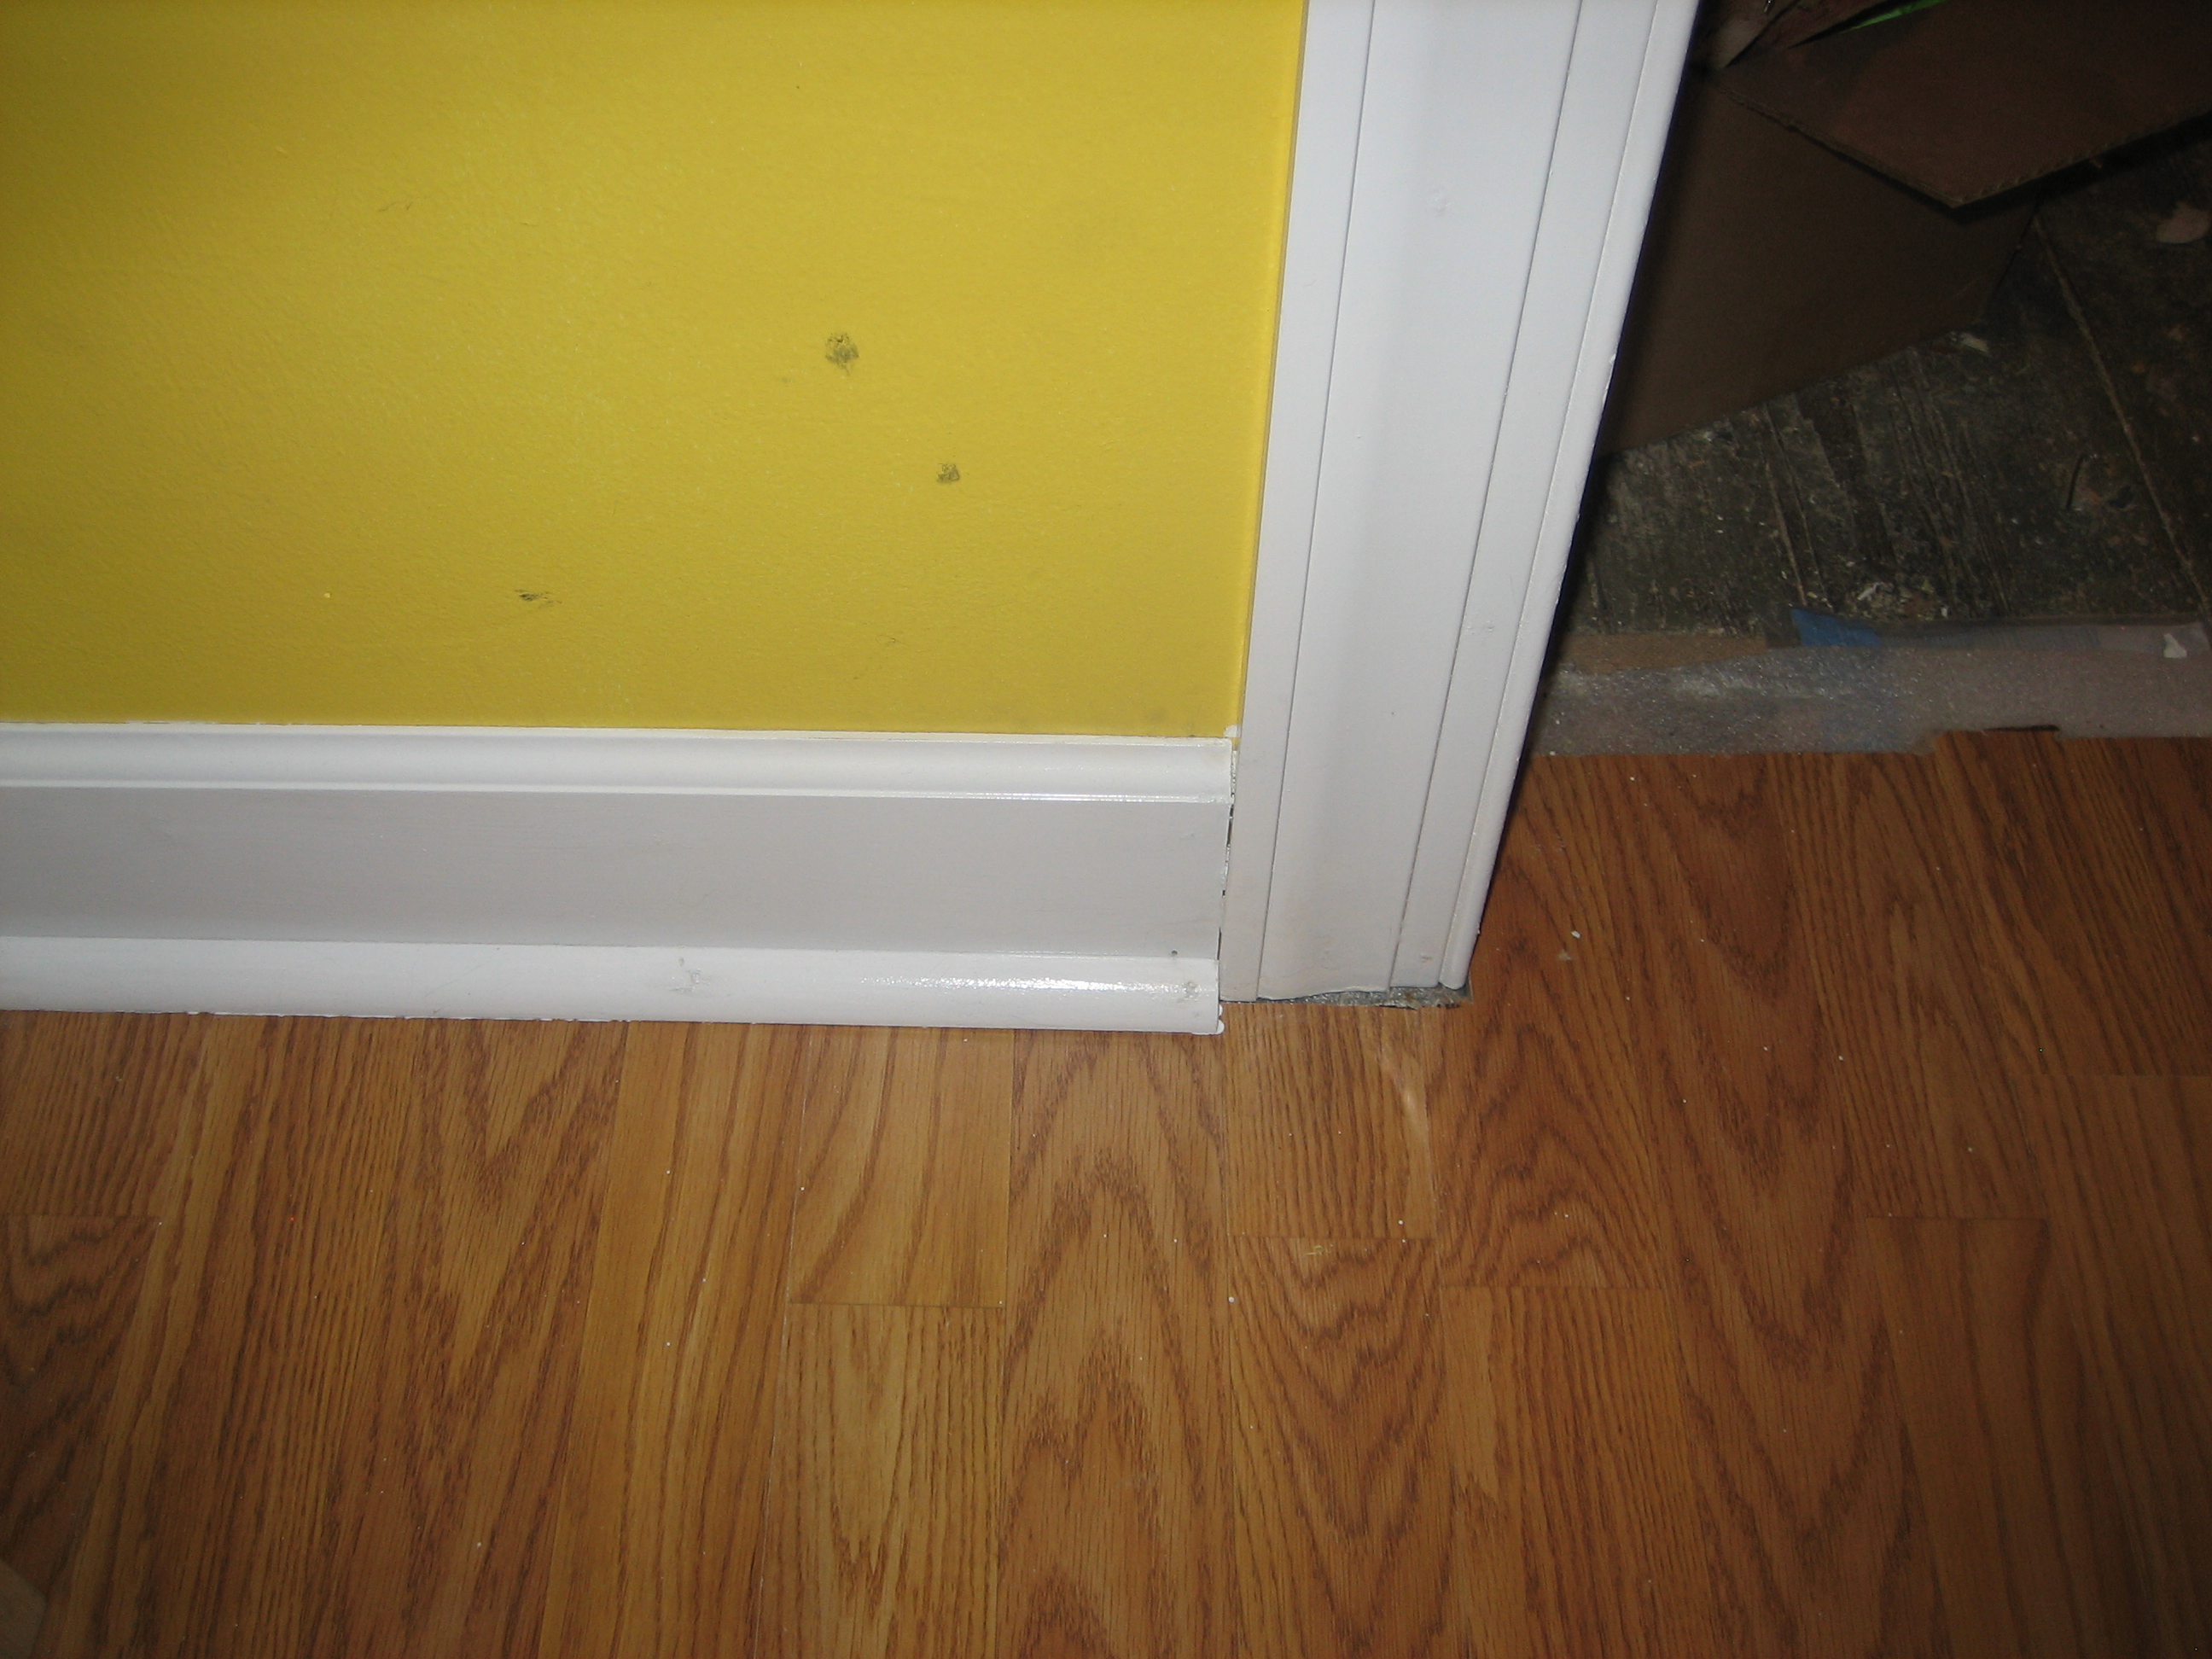 crown molding wallpaper,floor,laminate flooring,hardwood,flooring,yellow